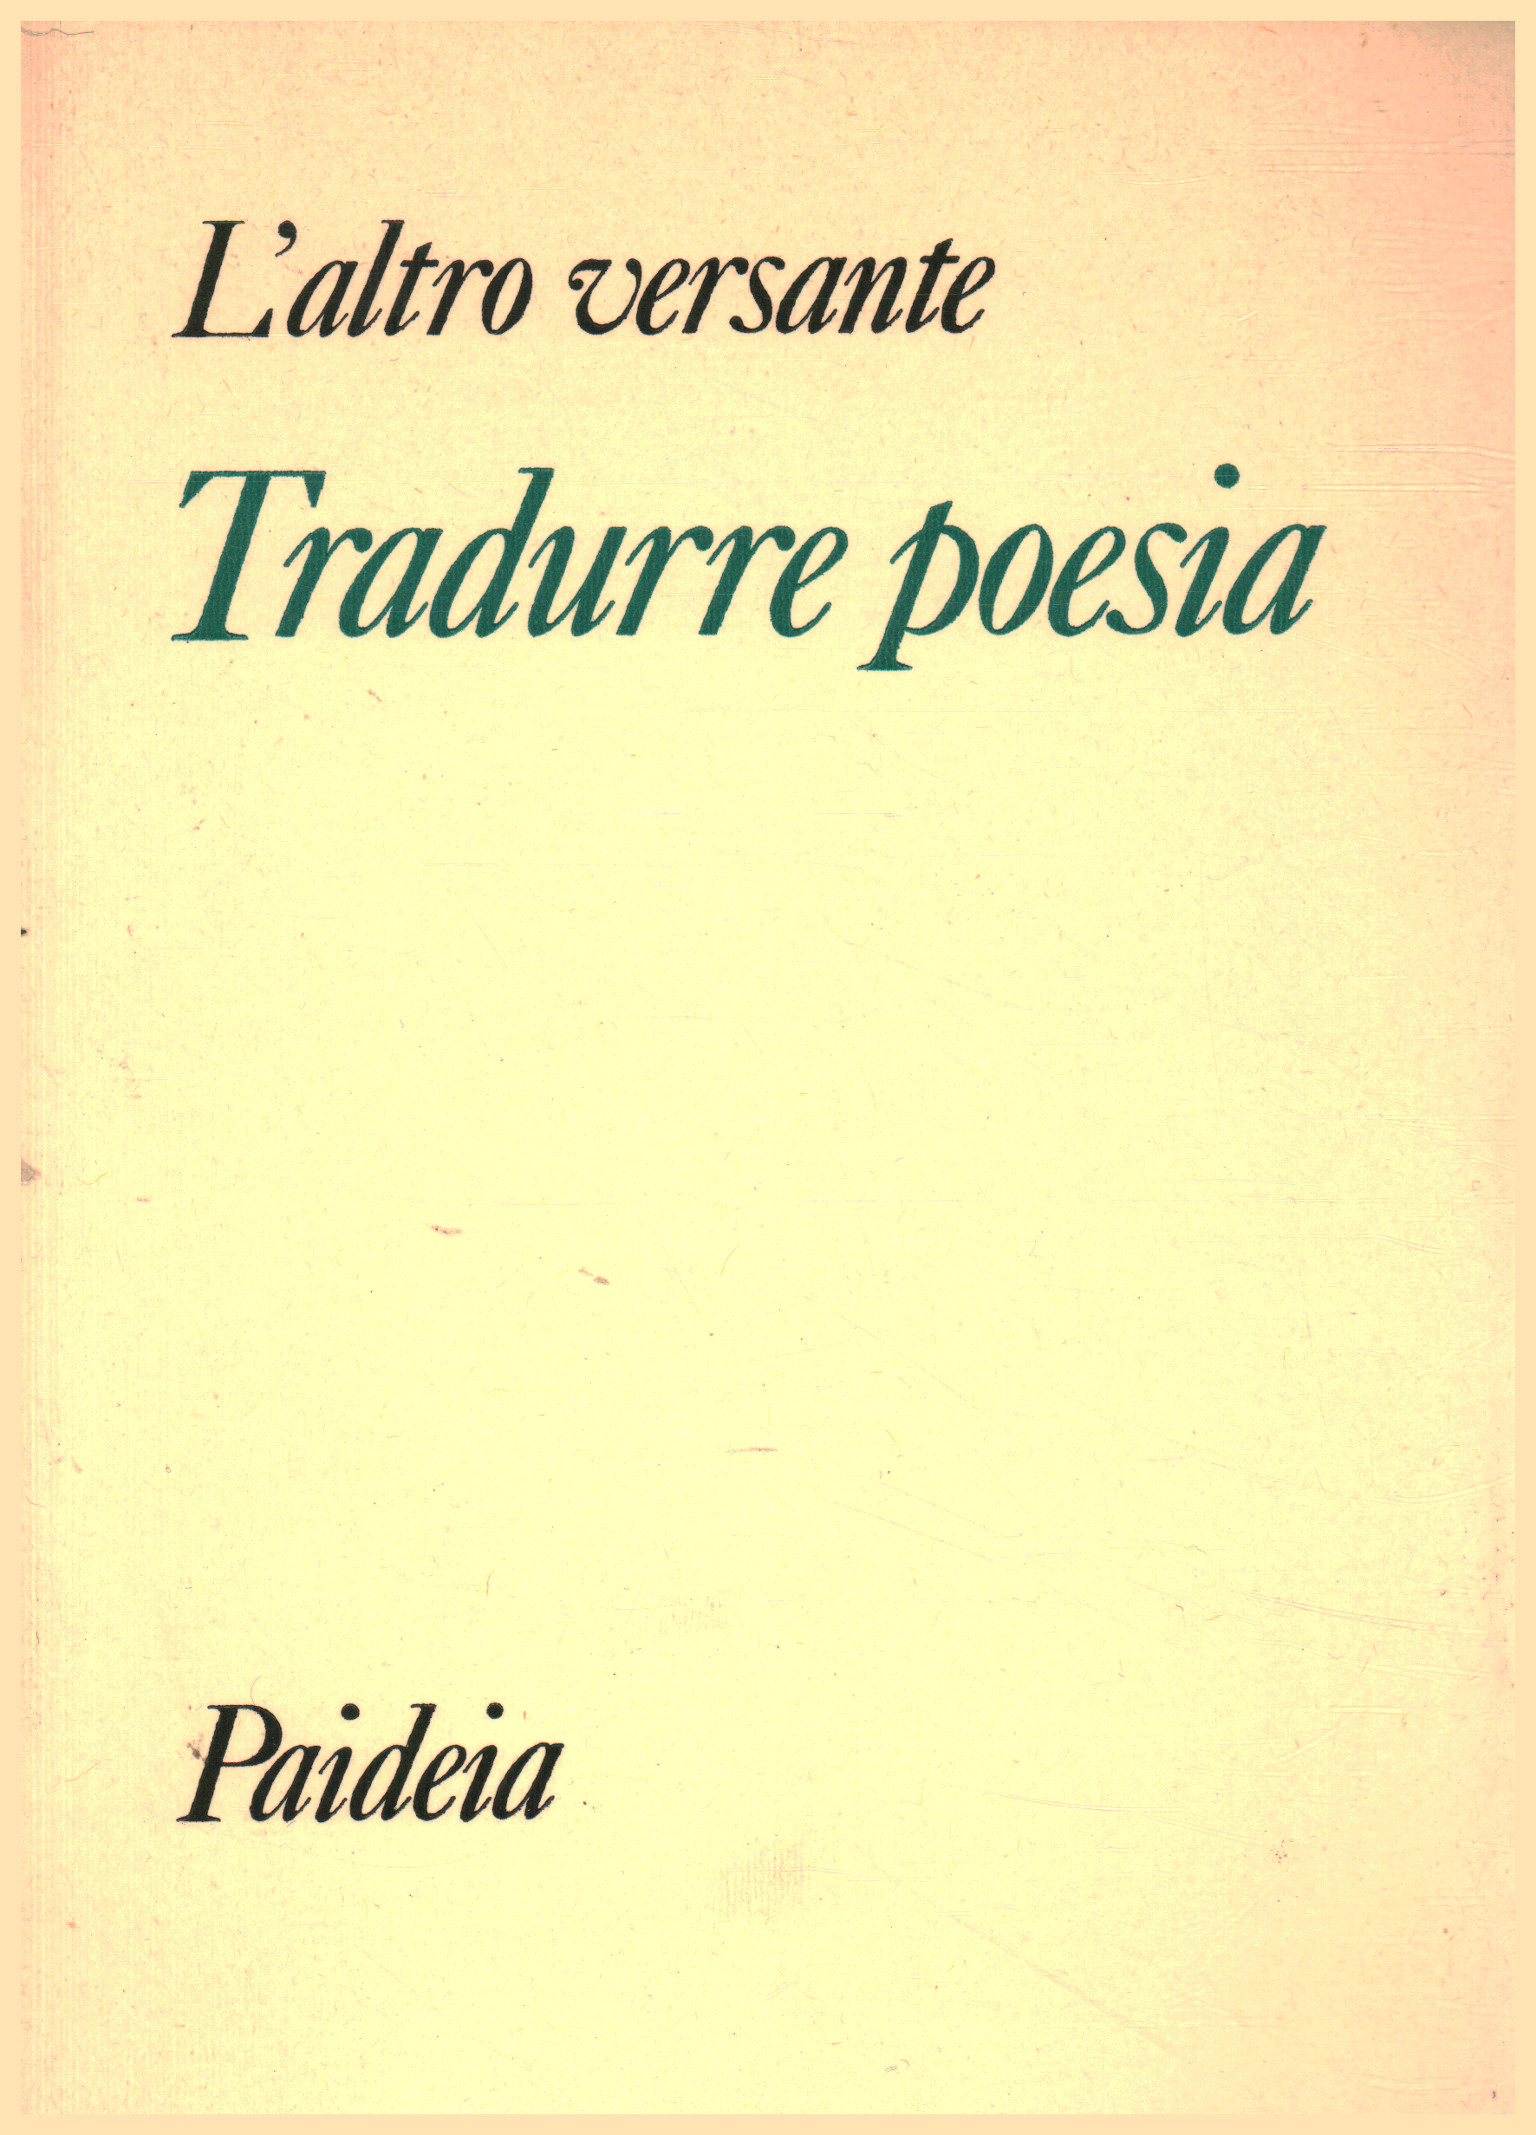 Tradurre poesia, Rosita Copioli